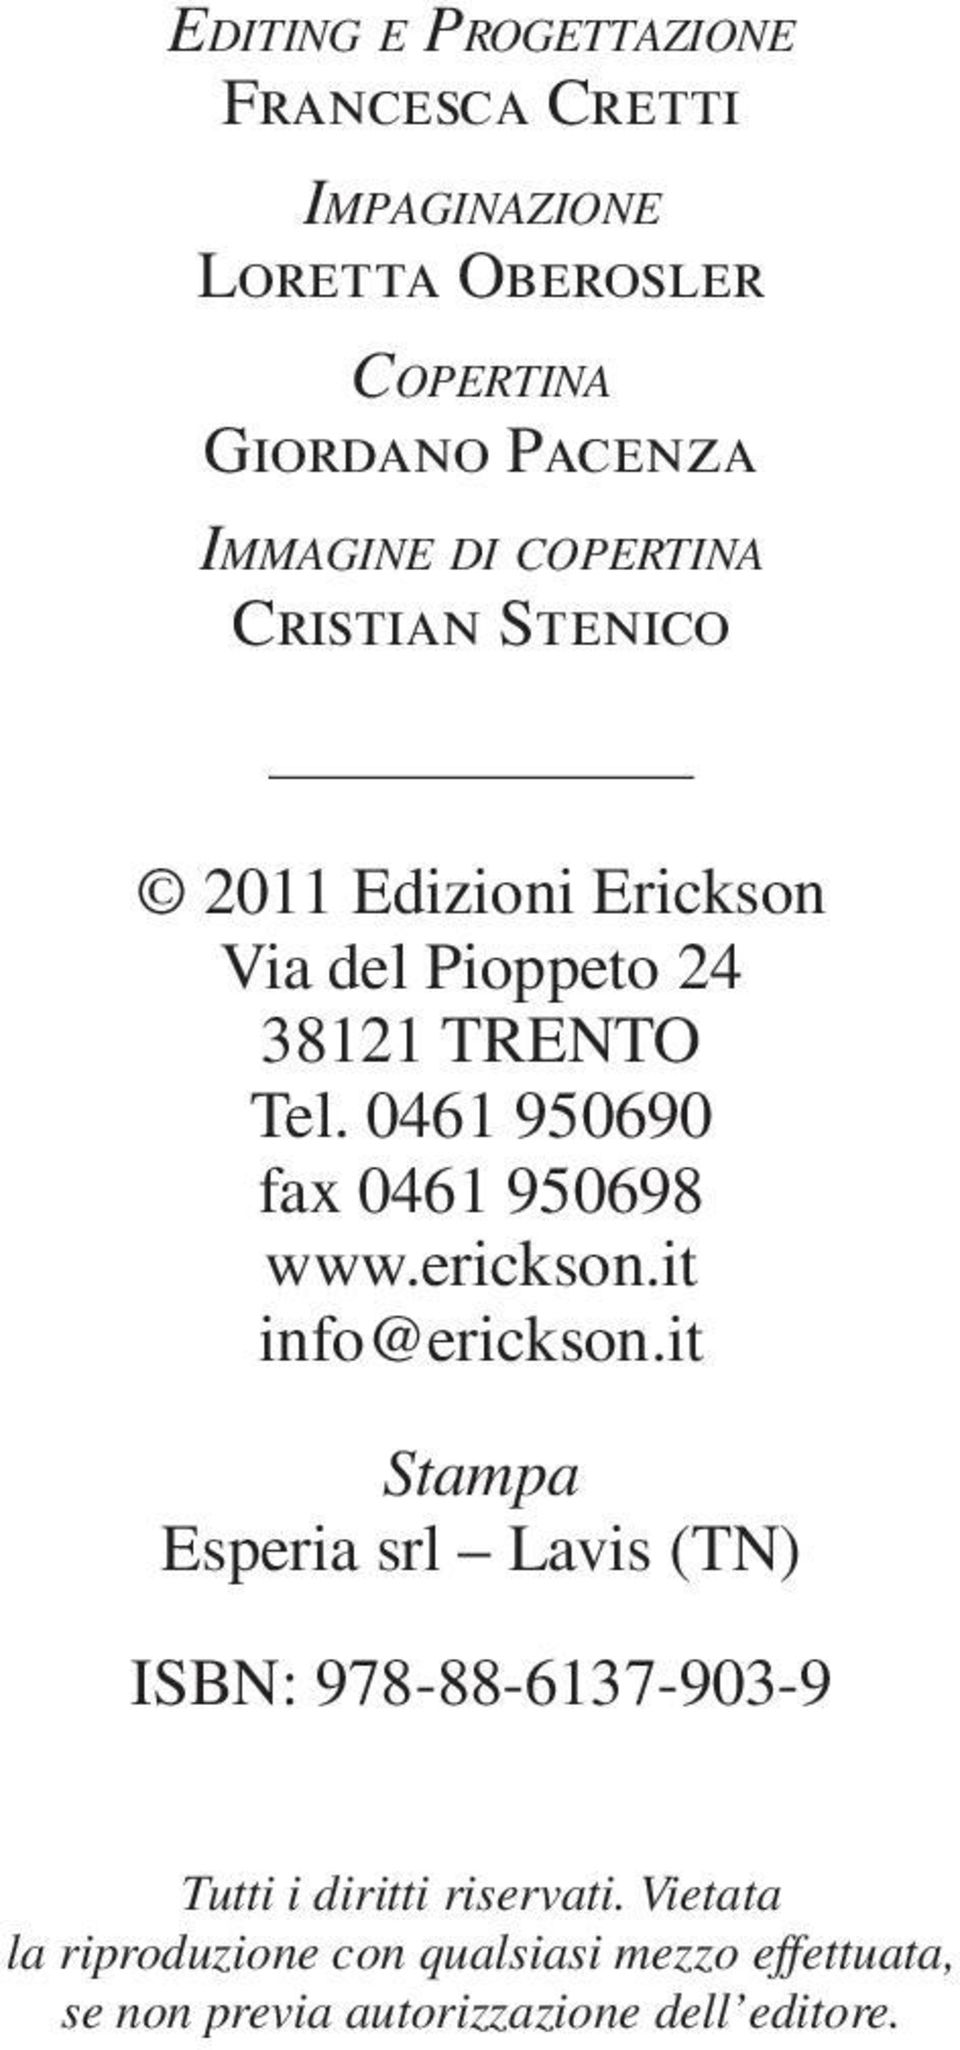 0461 950690 fax 0461 950698 www.erickson.it info@erickson.